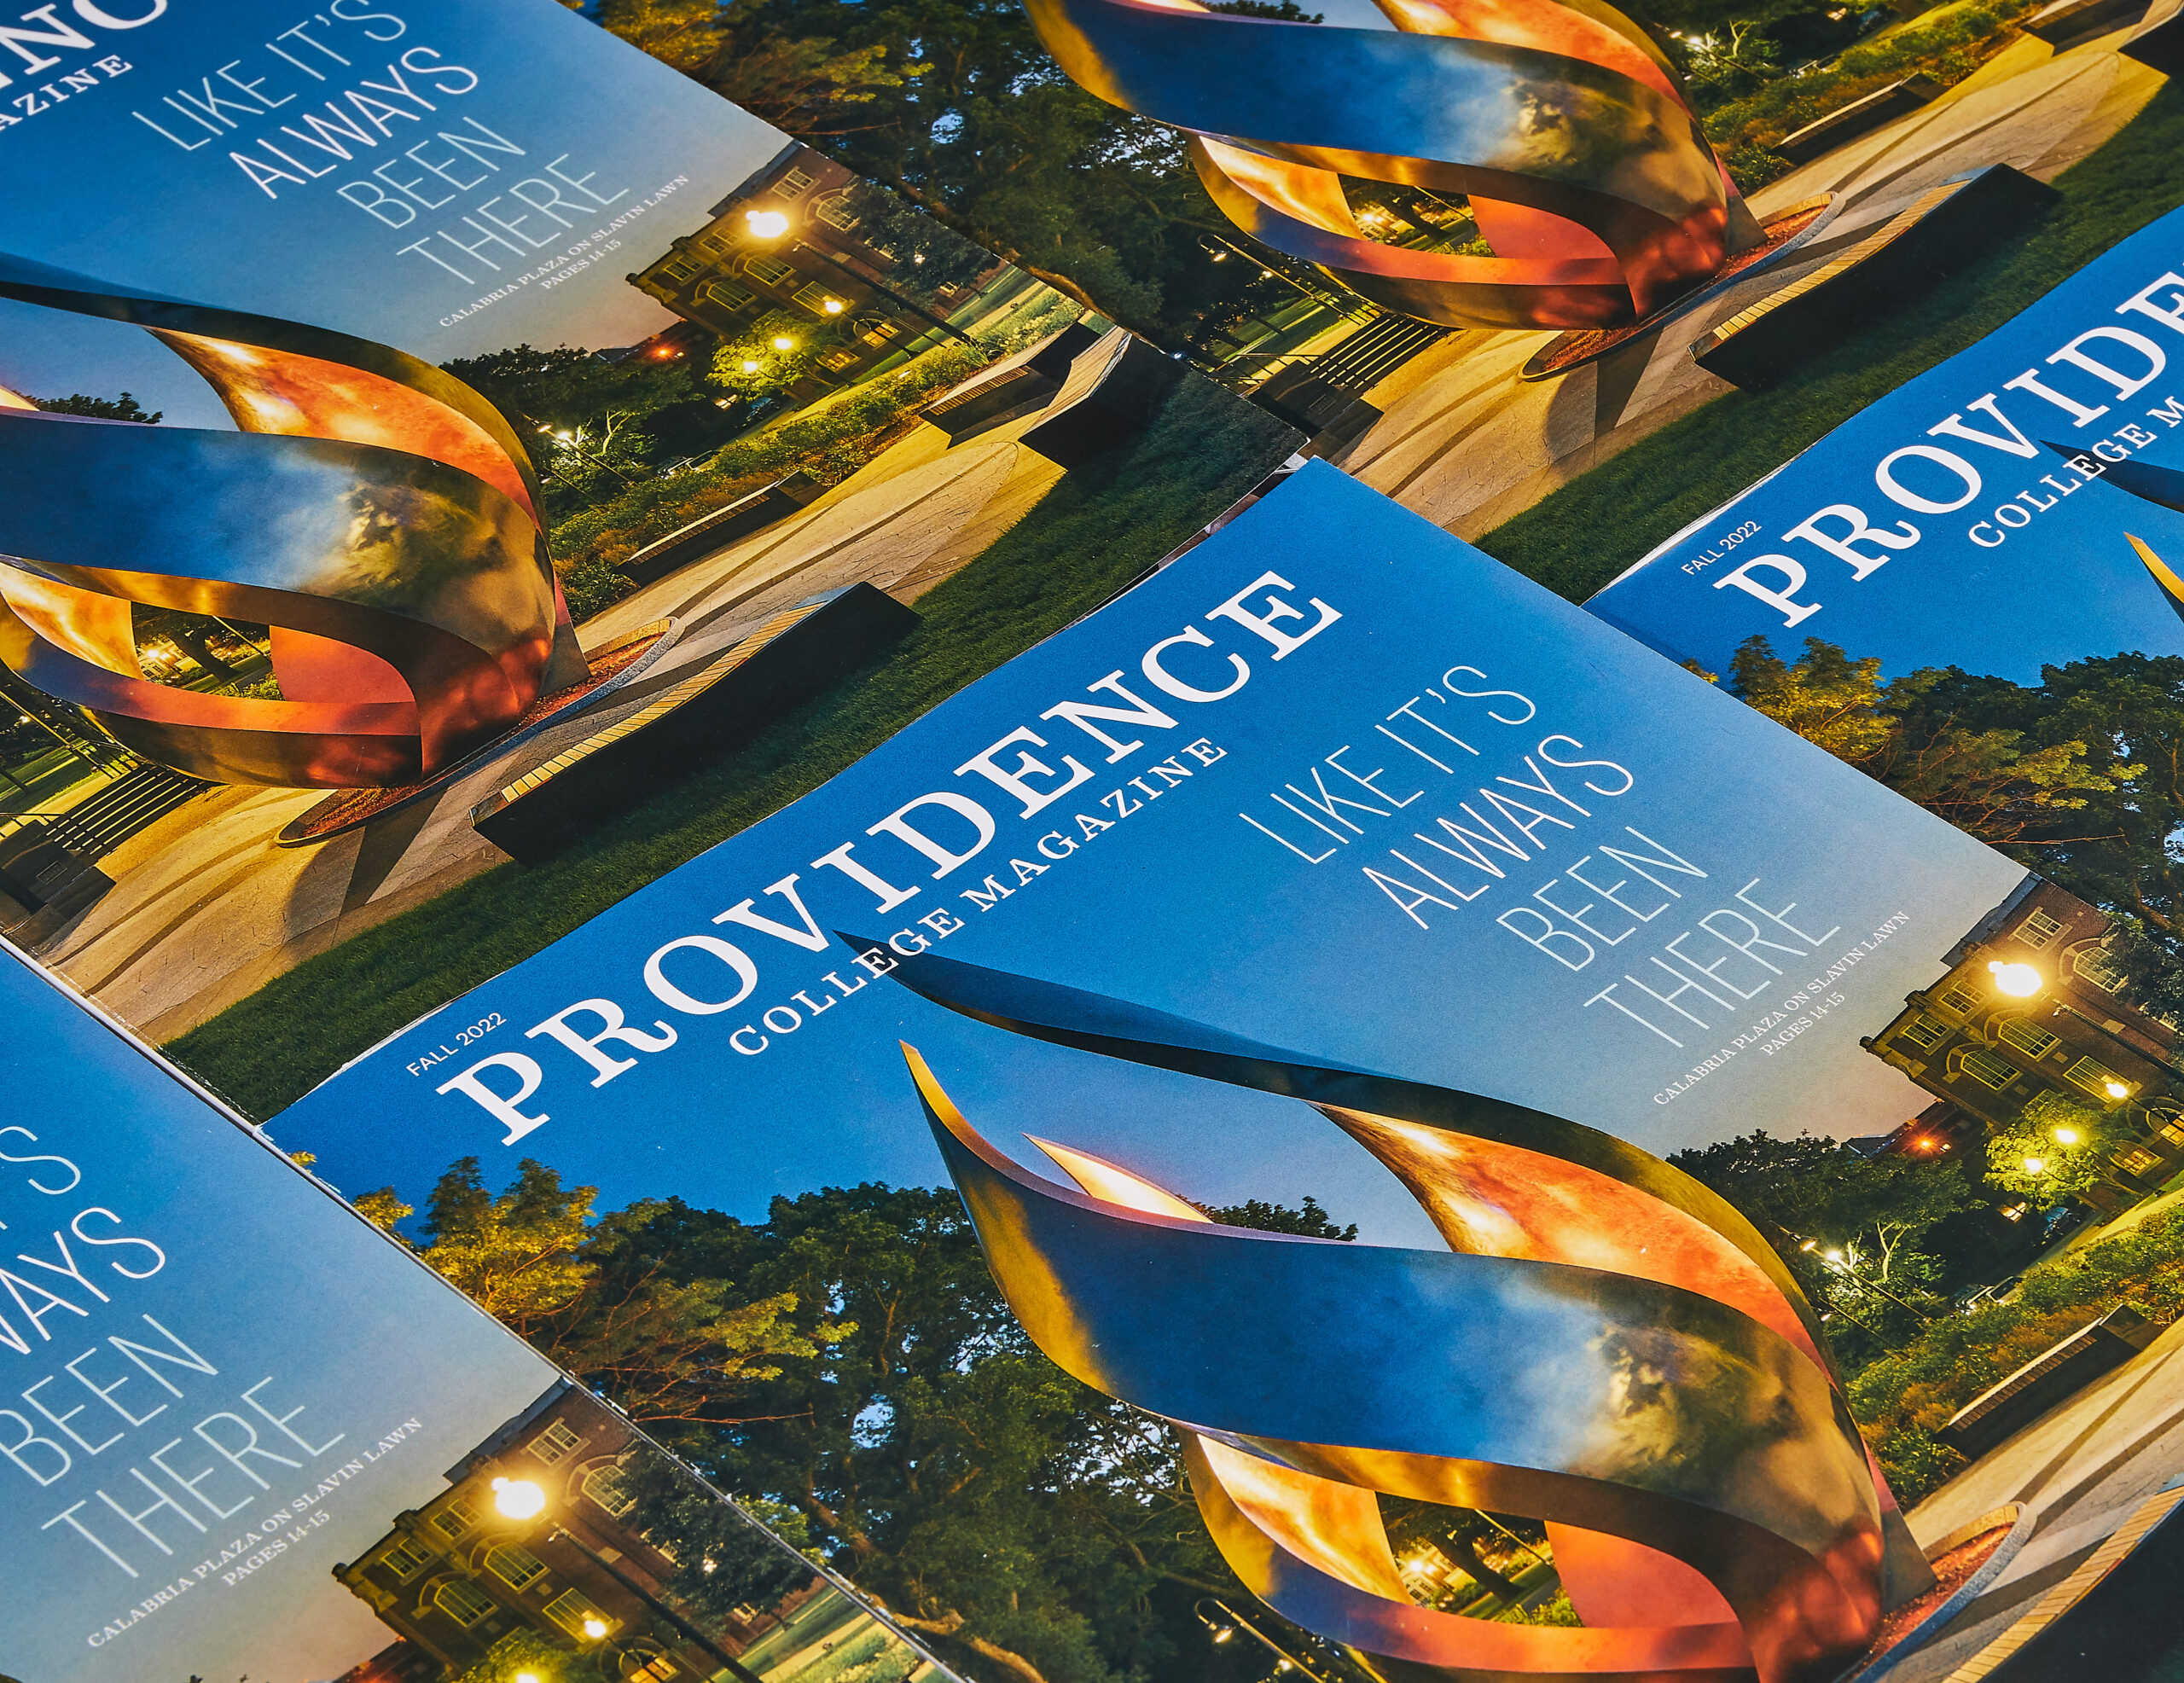 Providence College magazine